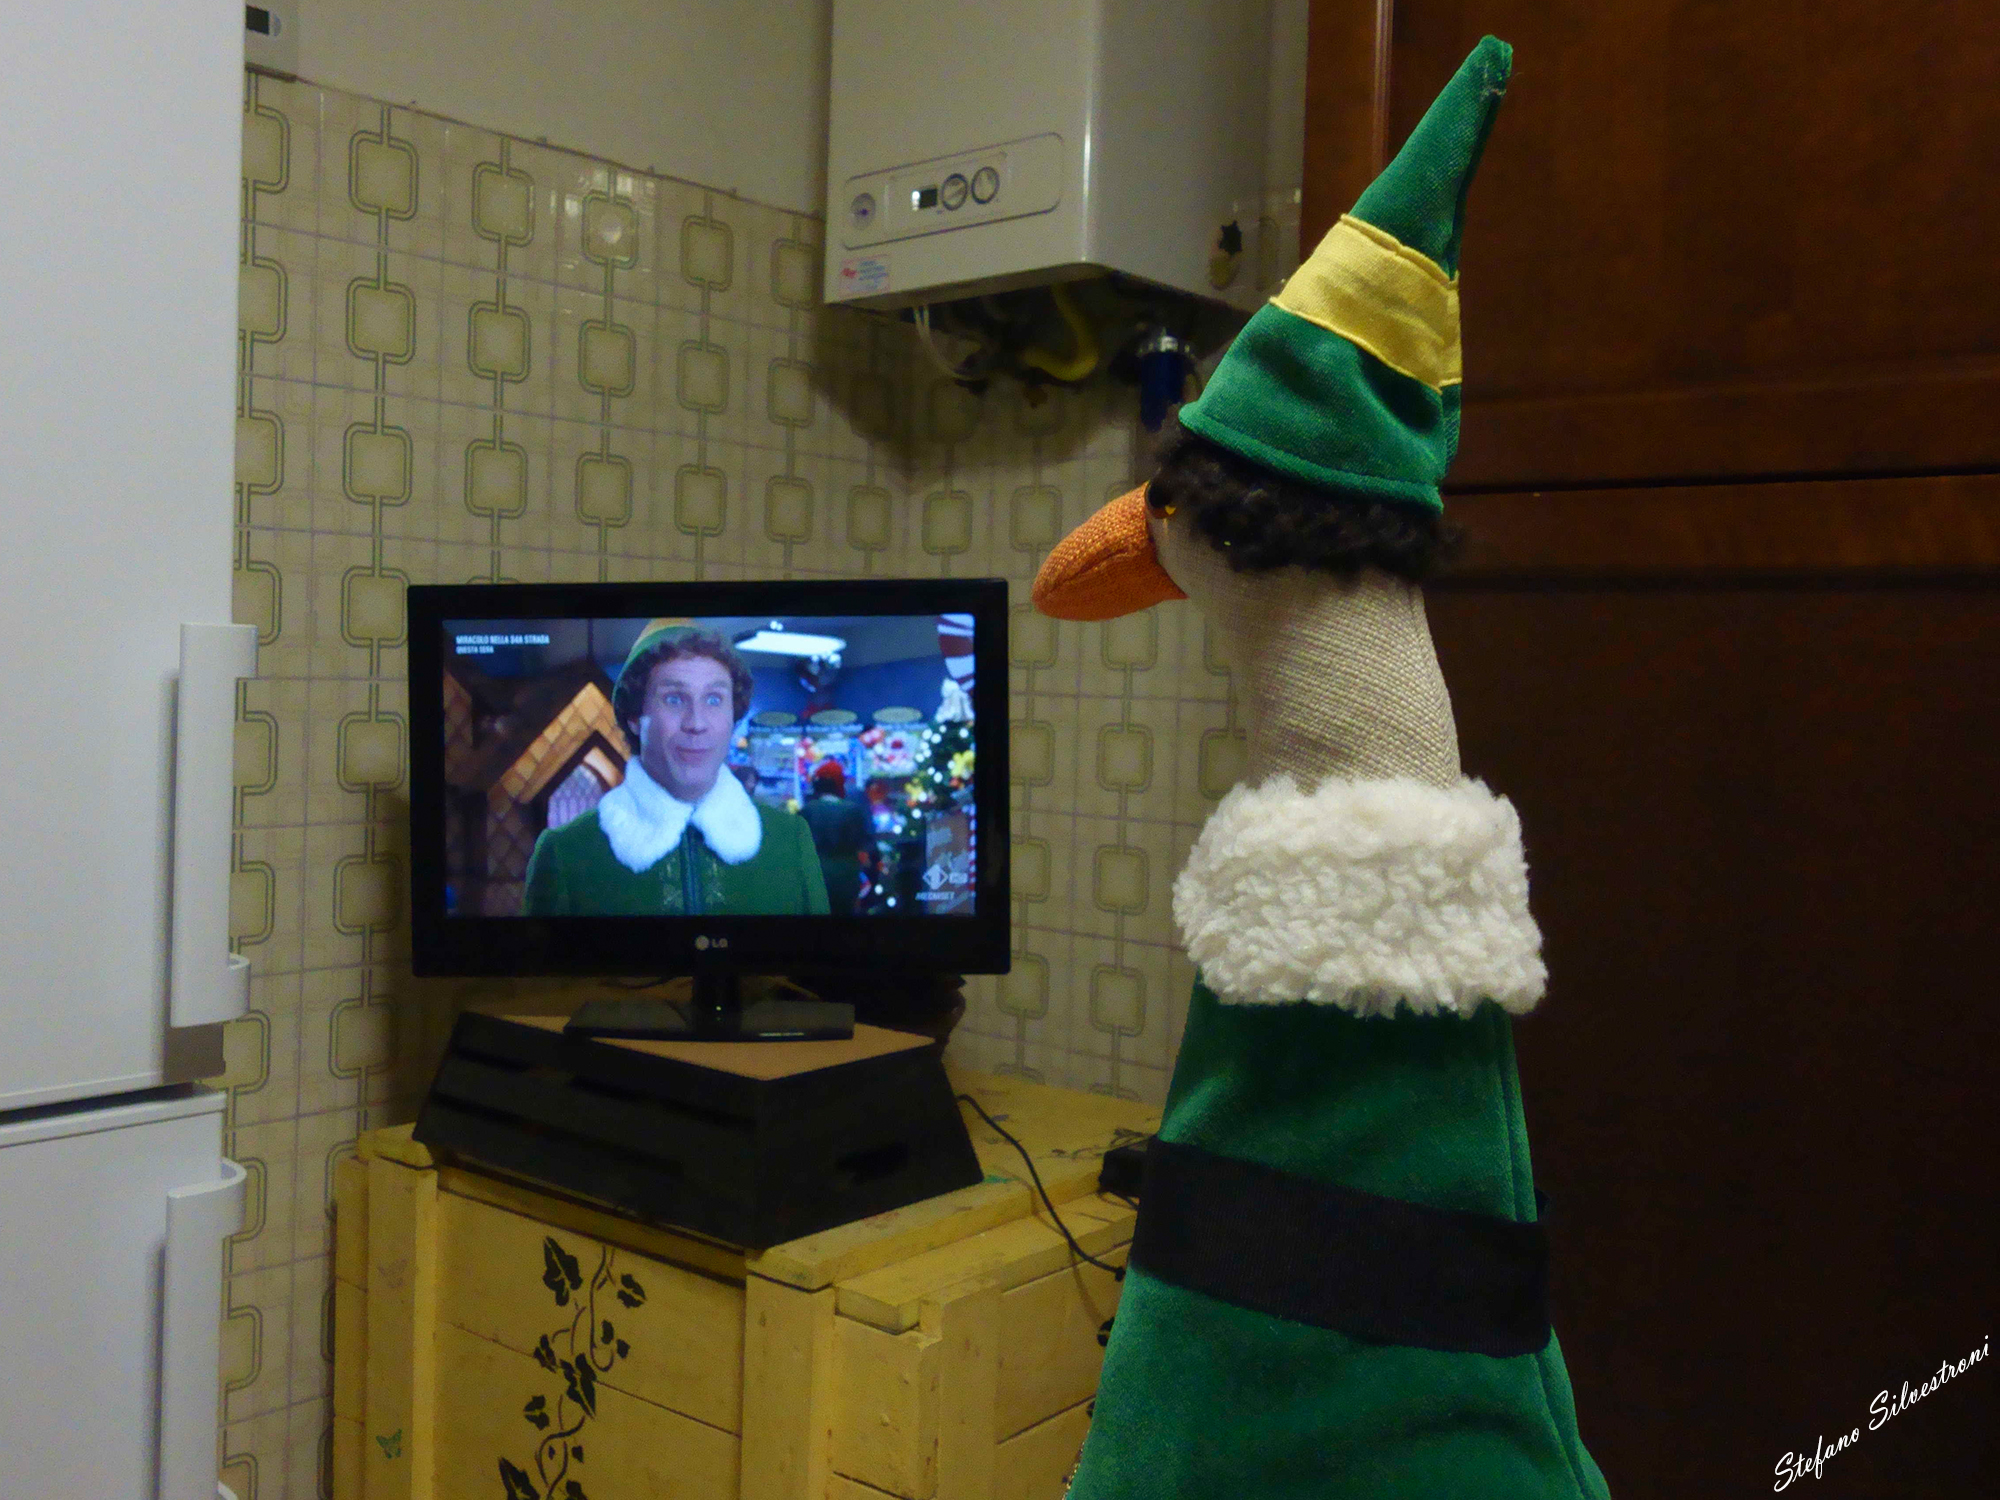 "Quack! ELF, my favorite Christmas movie!"...